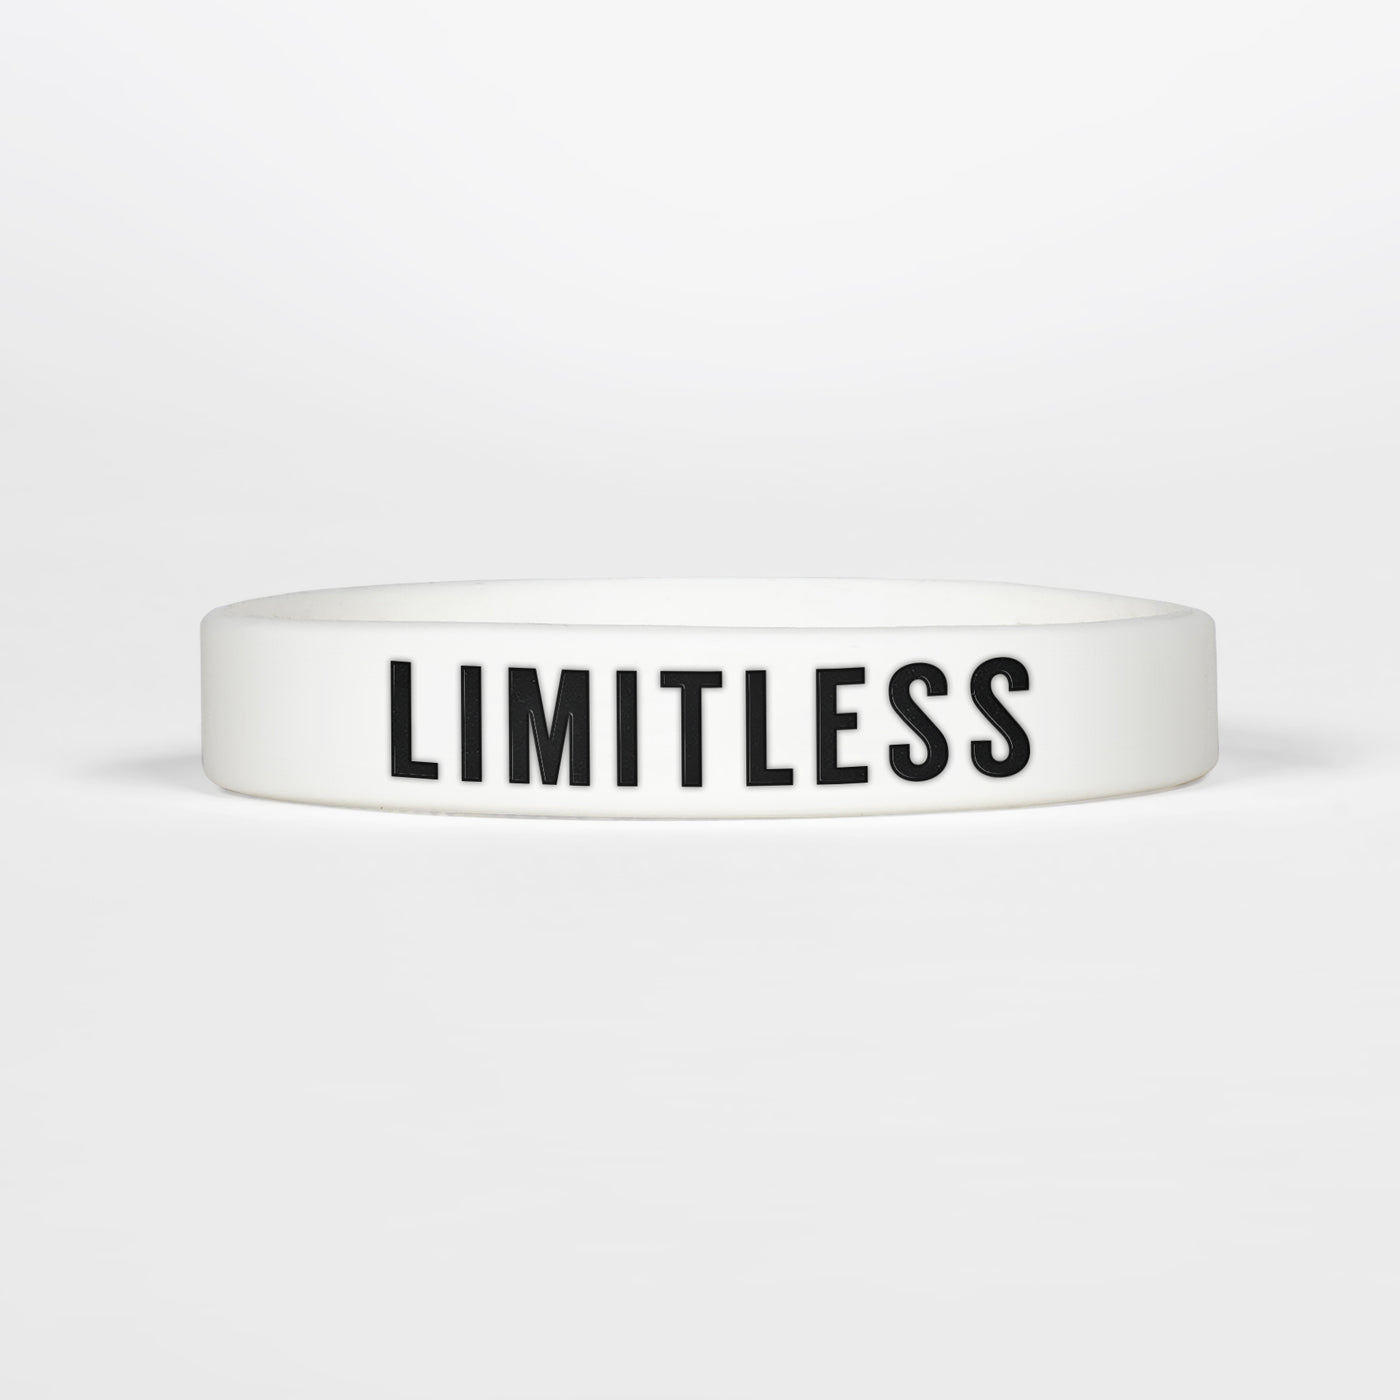 Limitless Motivational Wristband